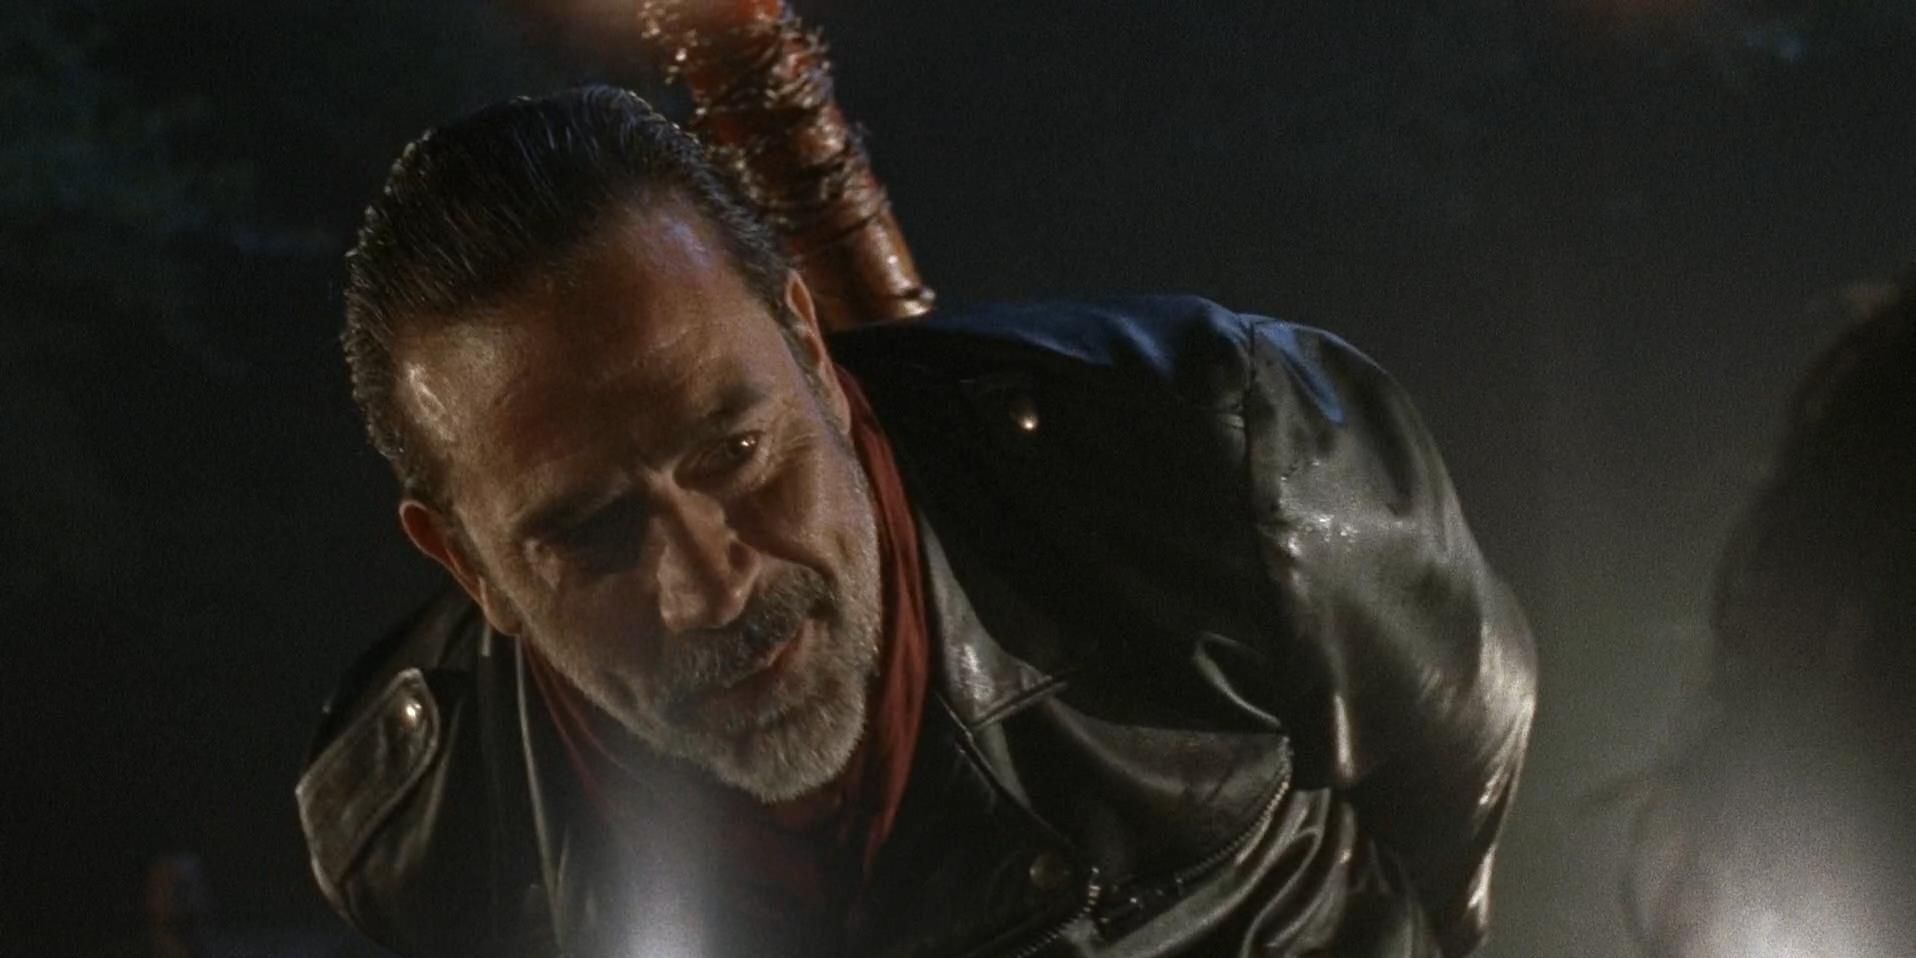 Negan looking down at Glenn in The Walking Dead 